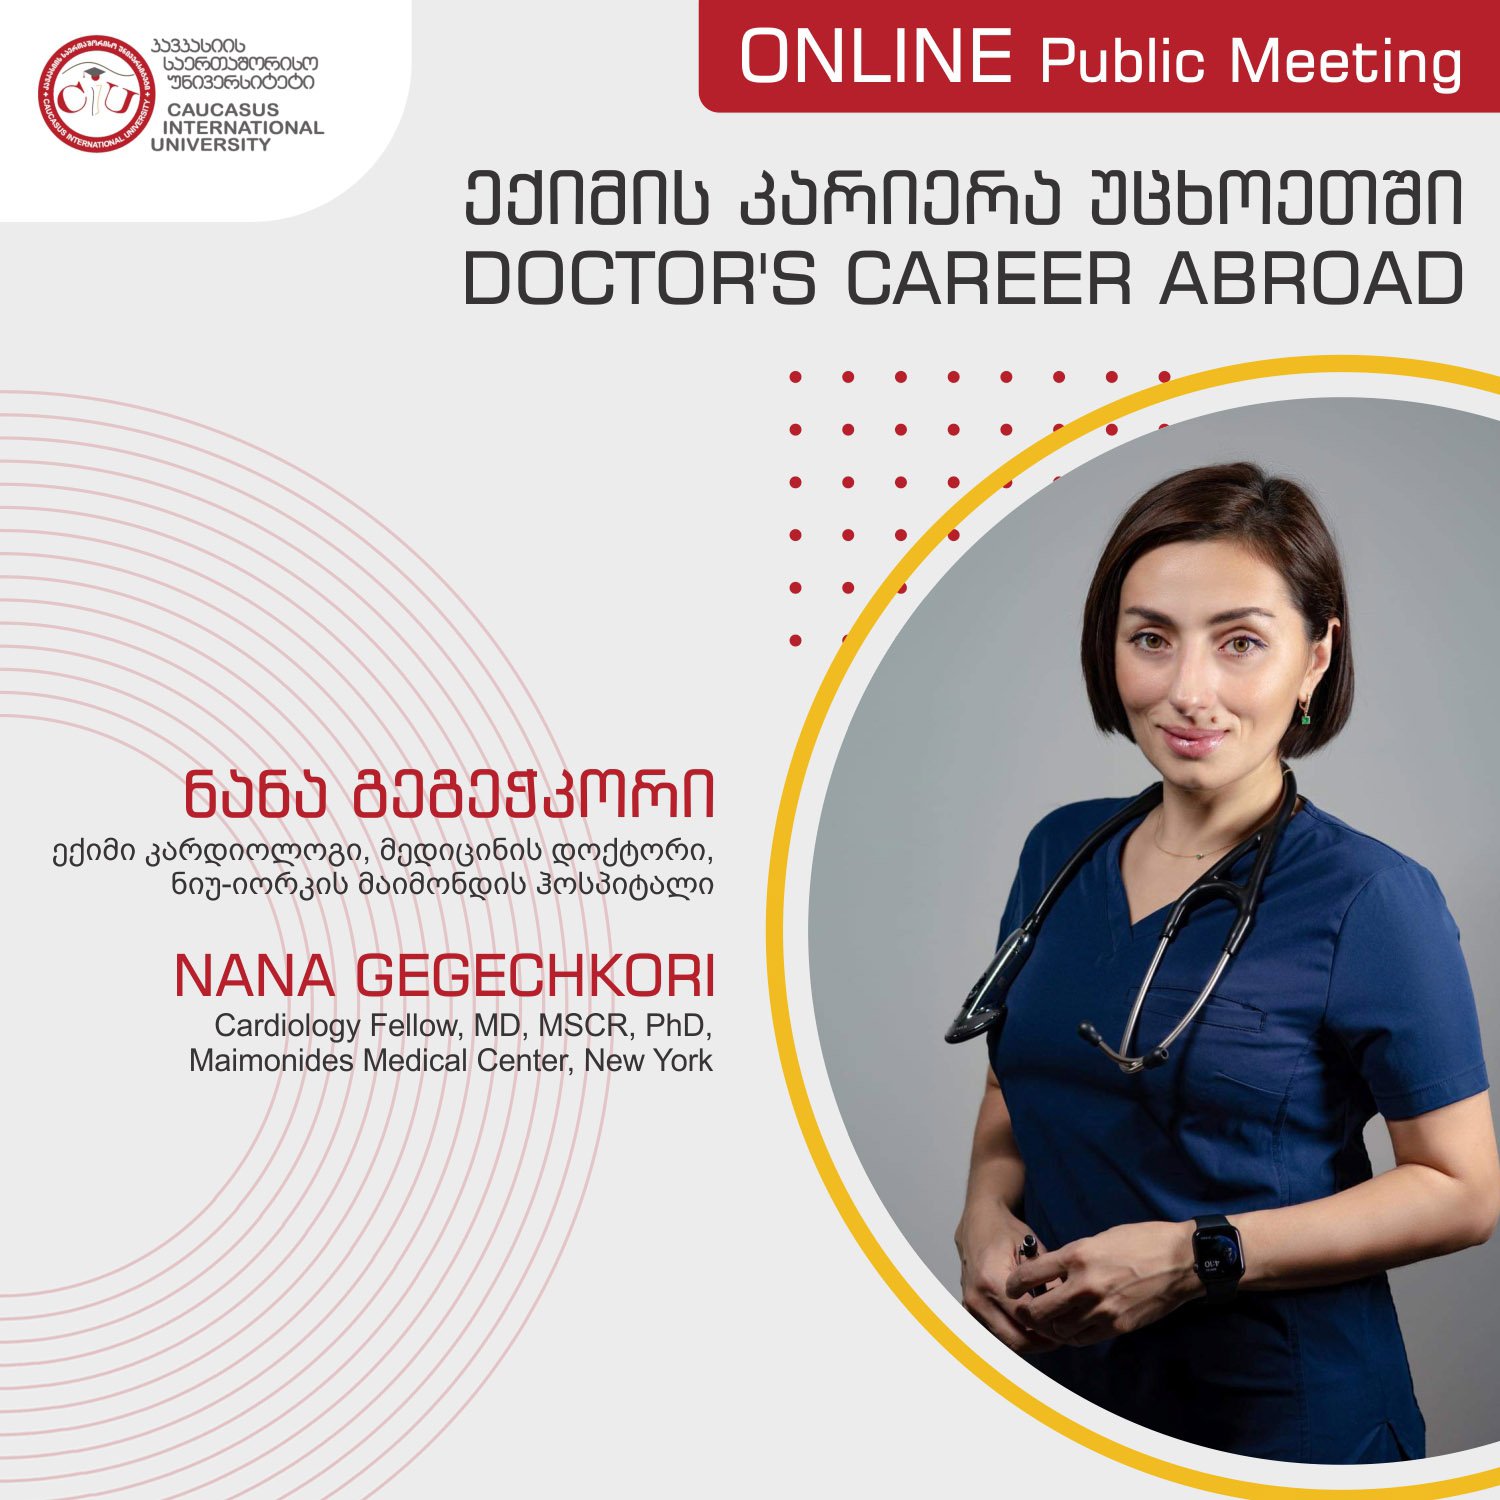 Cardiologist Fellow, Nana Gegchkori’s Webinar Was Held